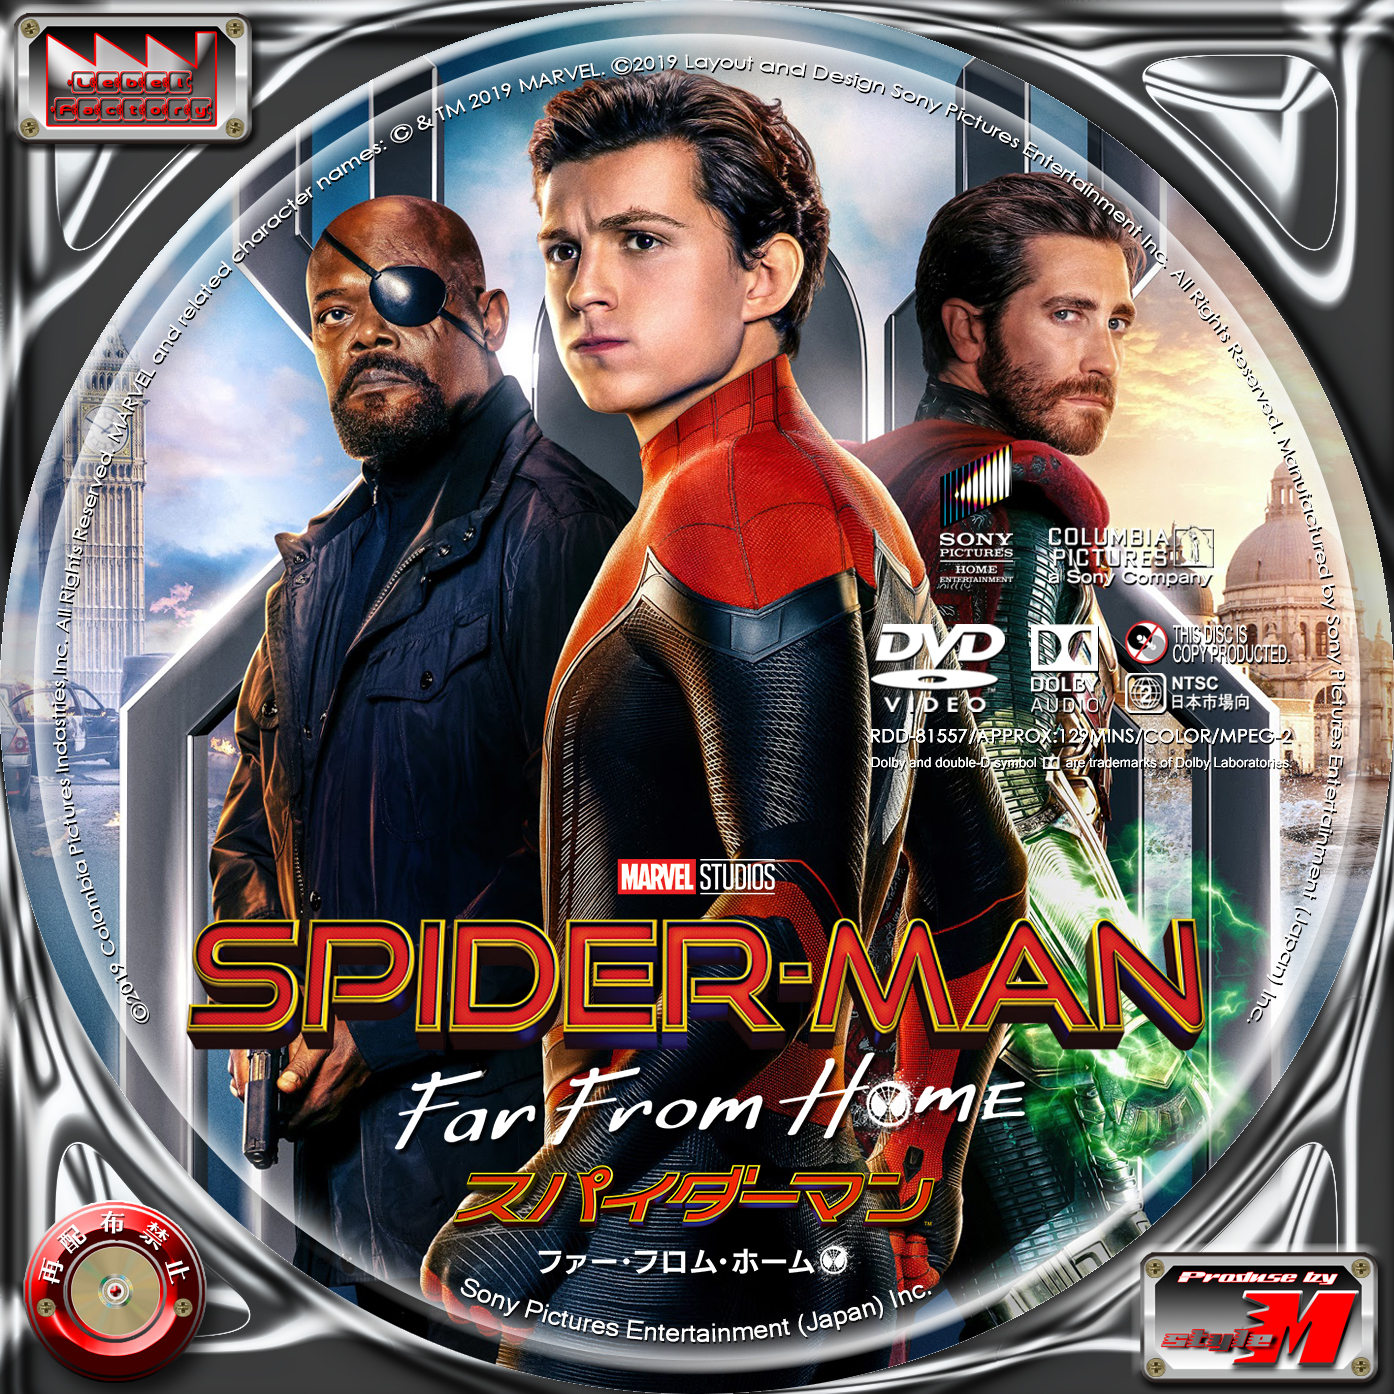 Label Factory M Style 自作dvd レーベル ラベル スパイダーマン ファー フロム ホーム Spider Man Far From Home